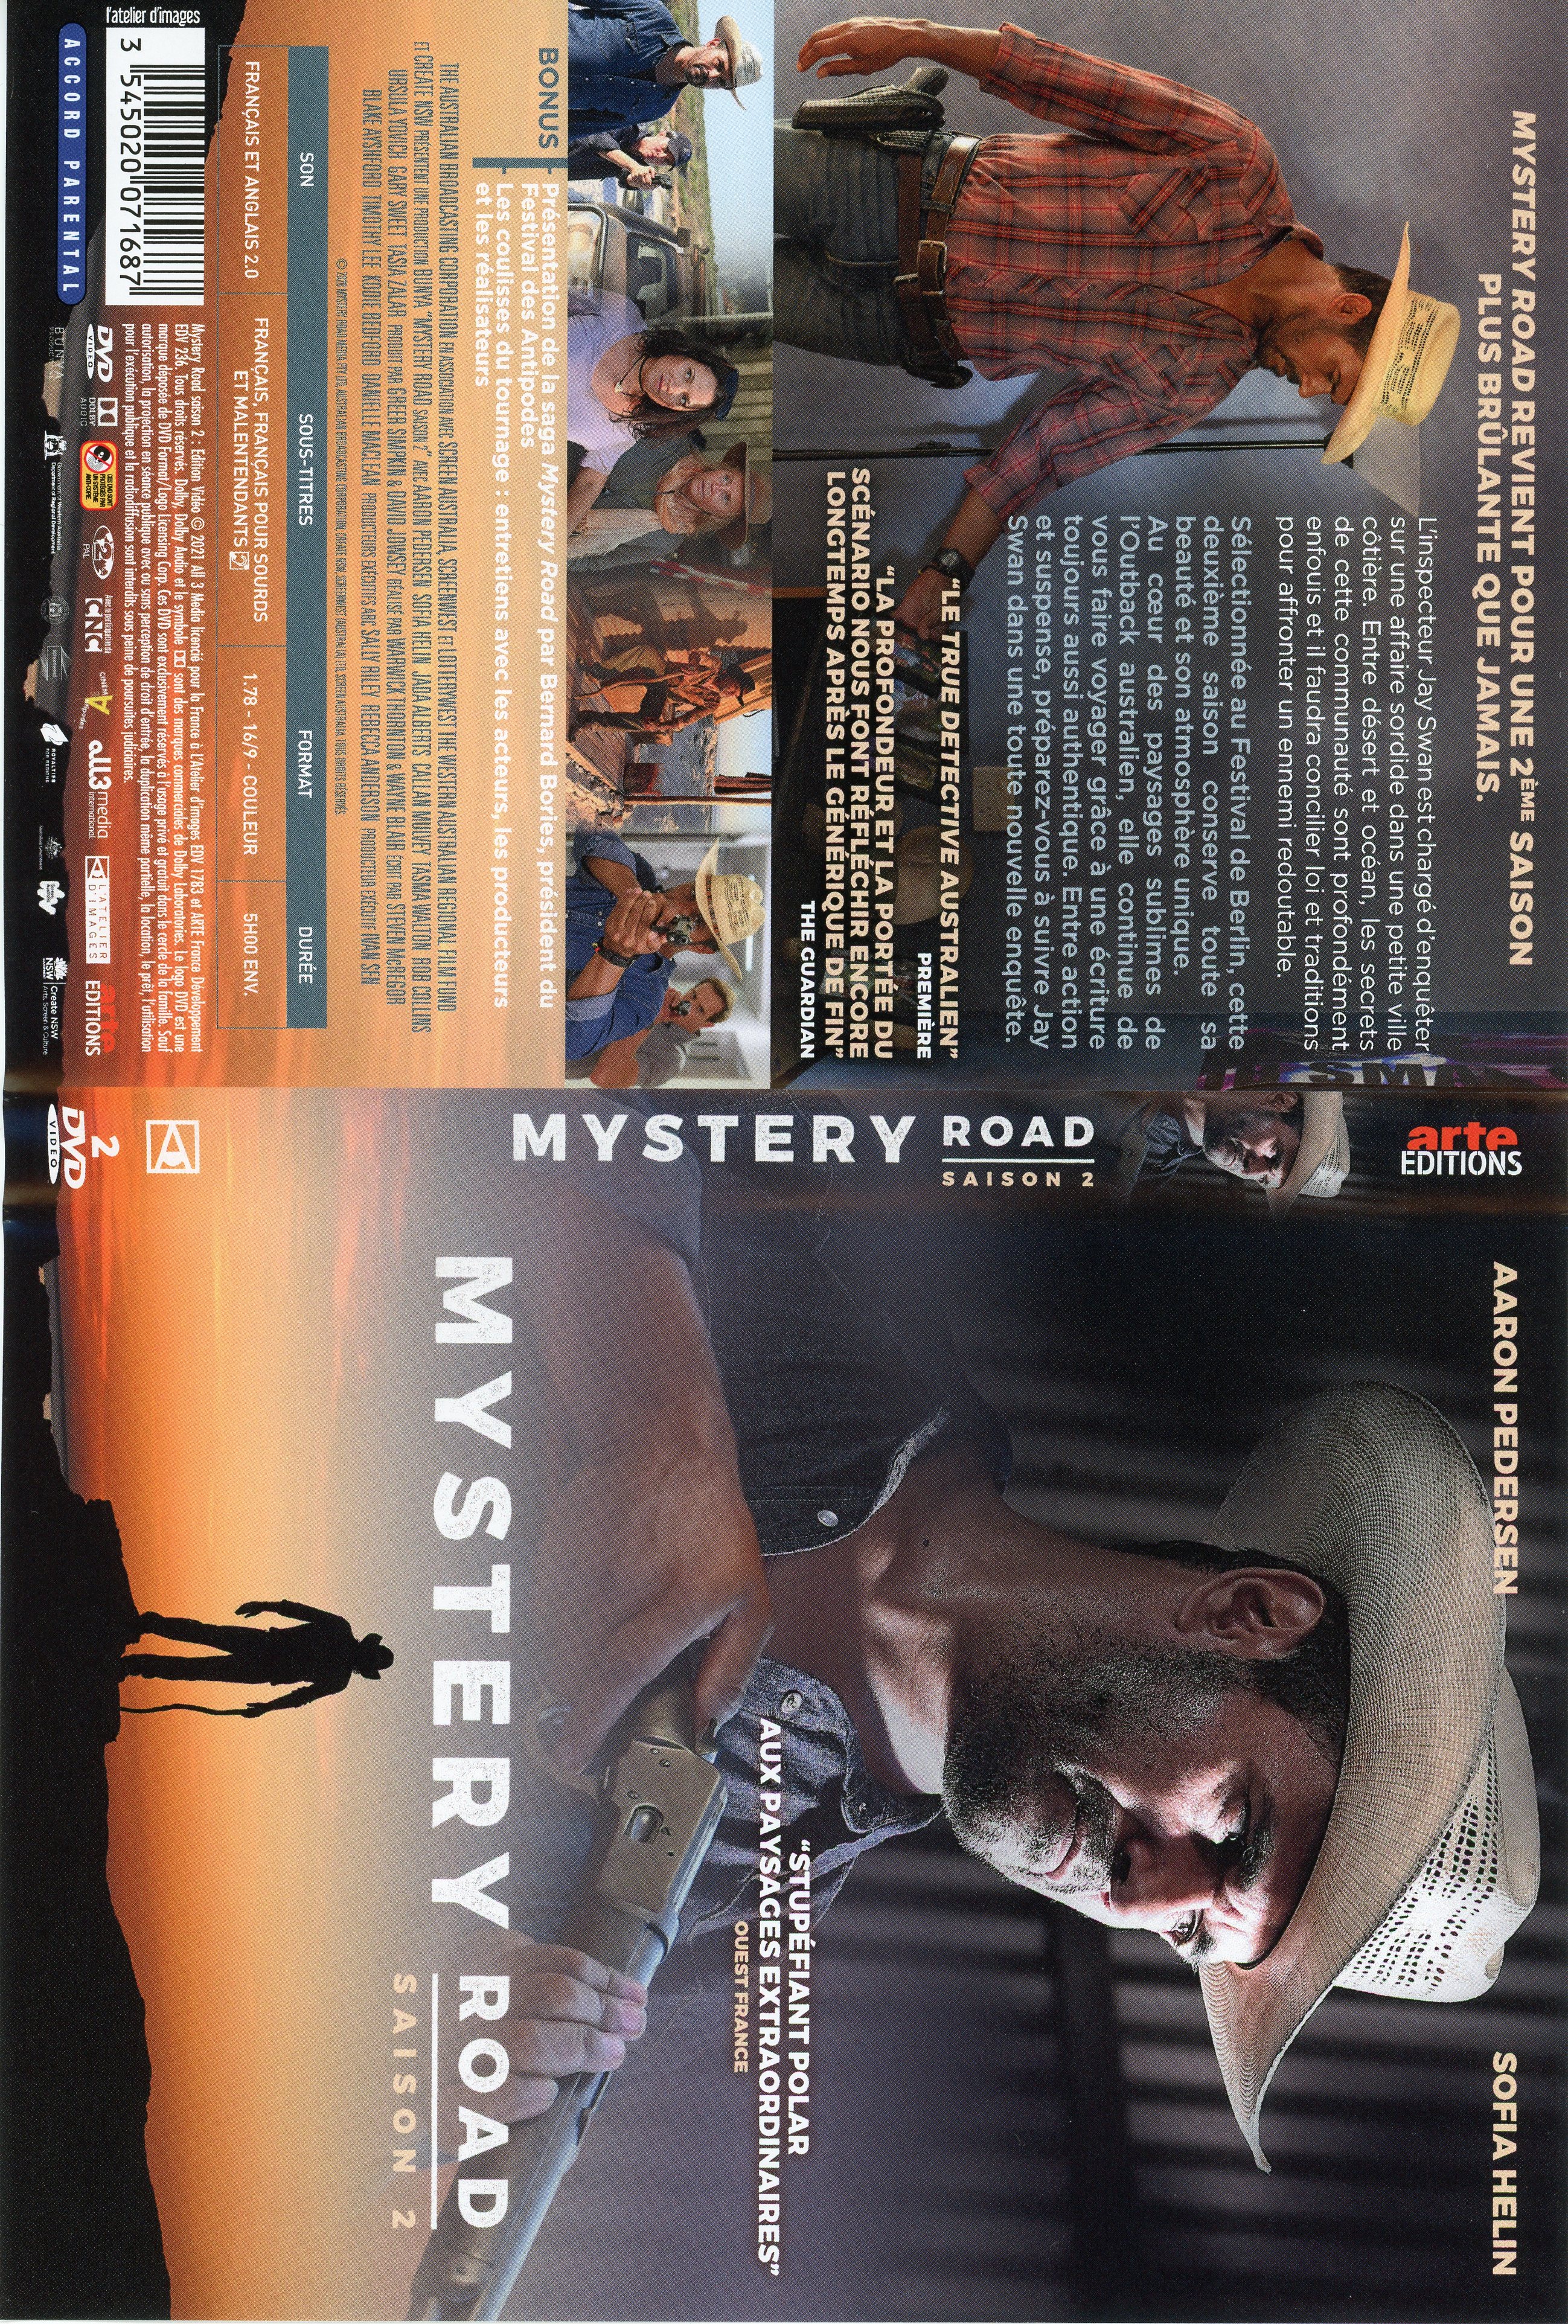 Jaquette DVD Mystery road saison 2